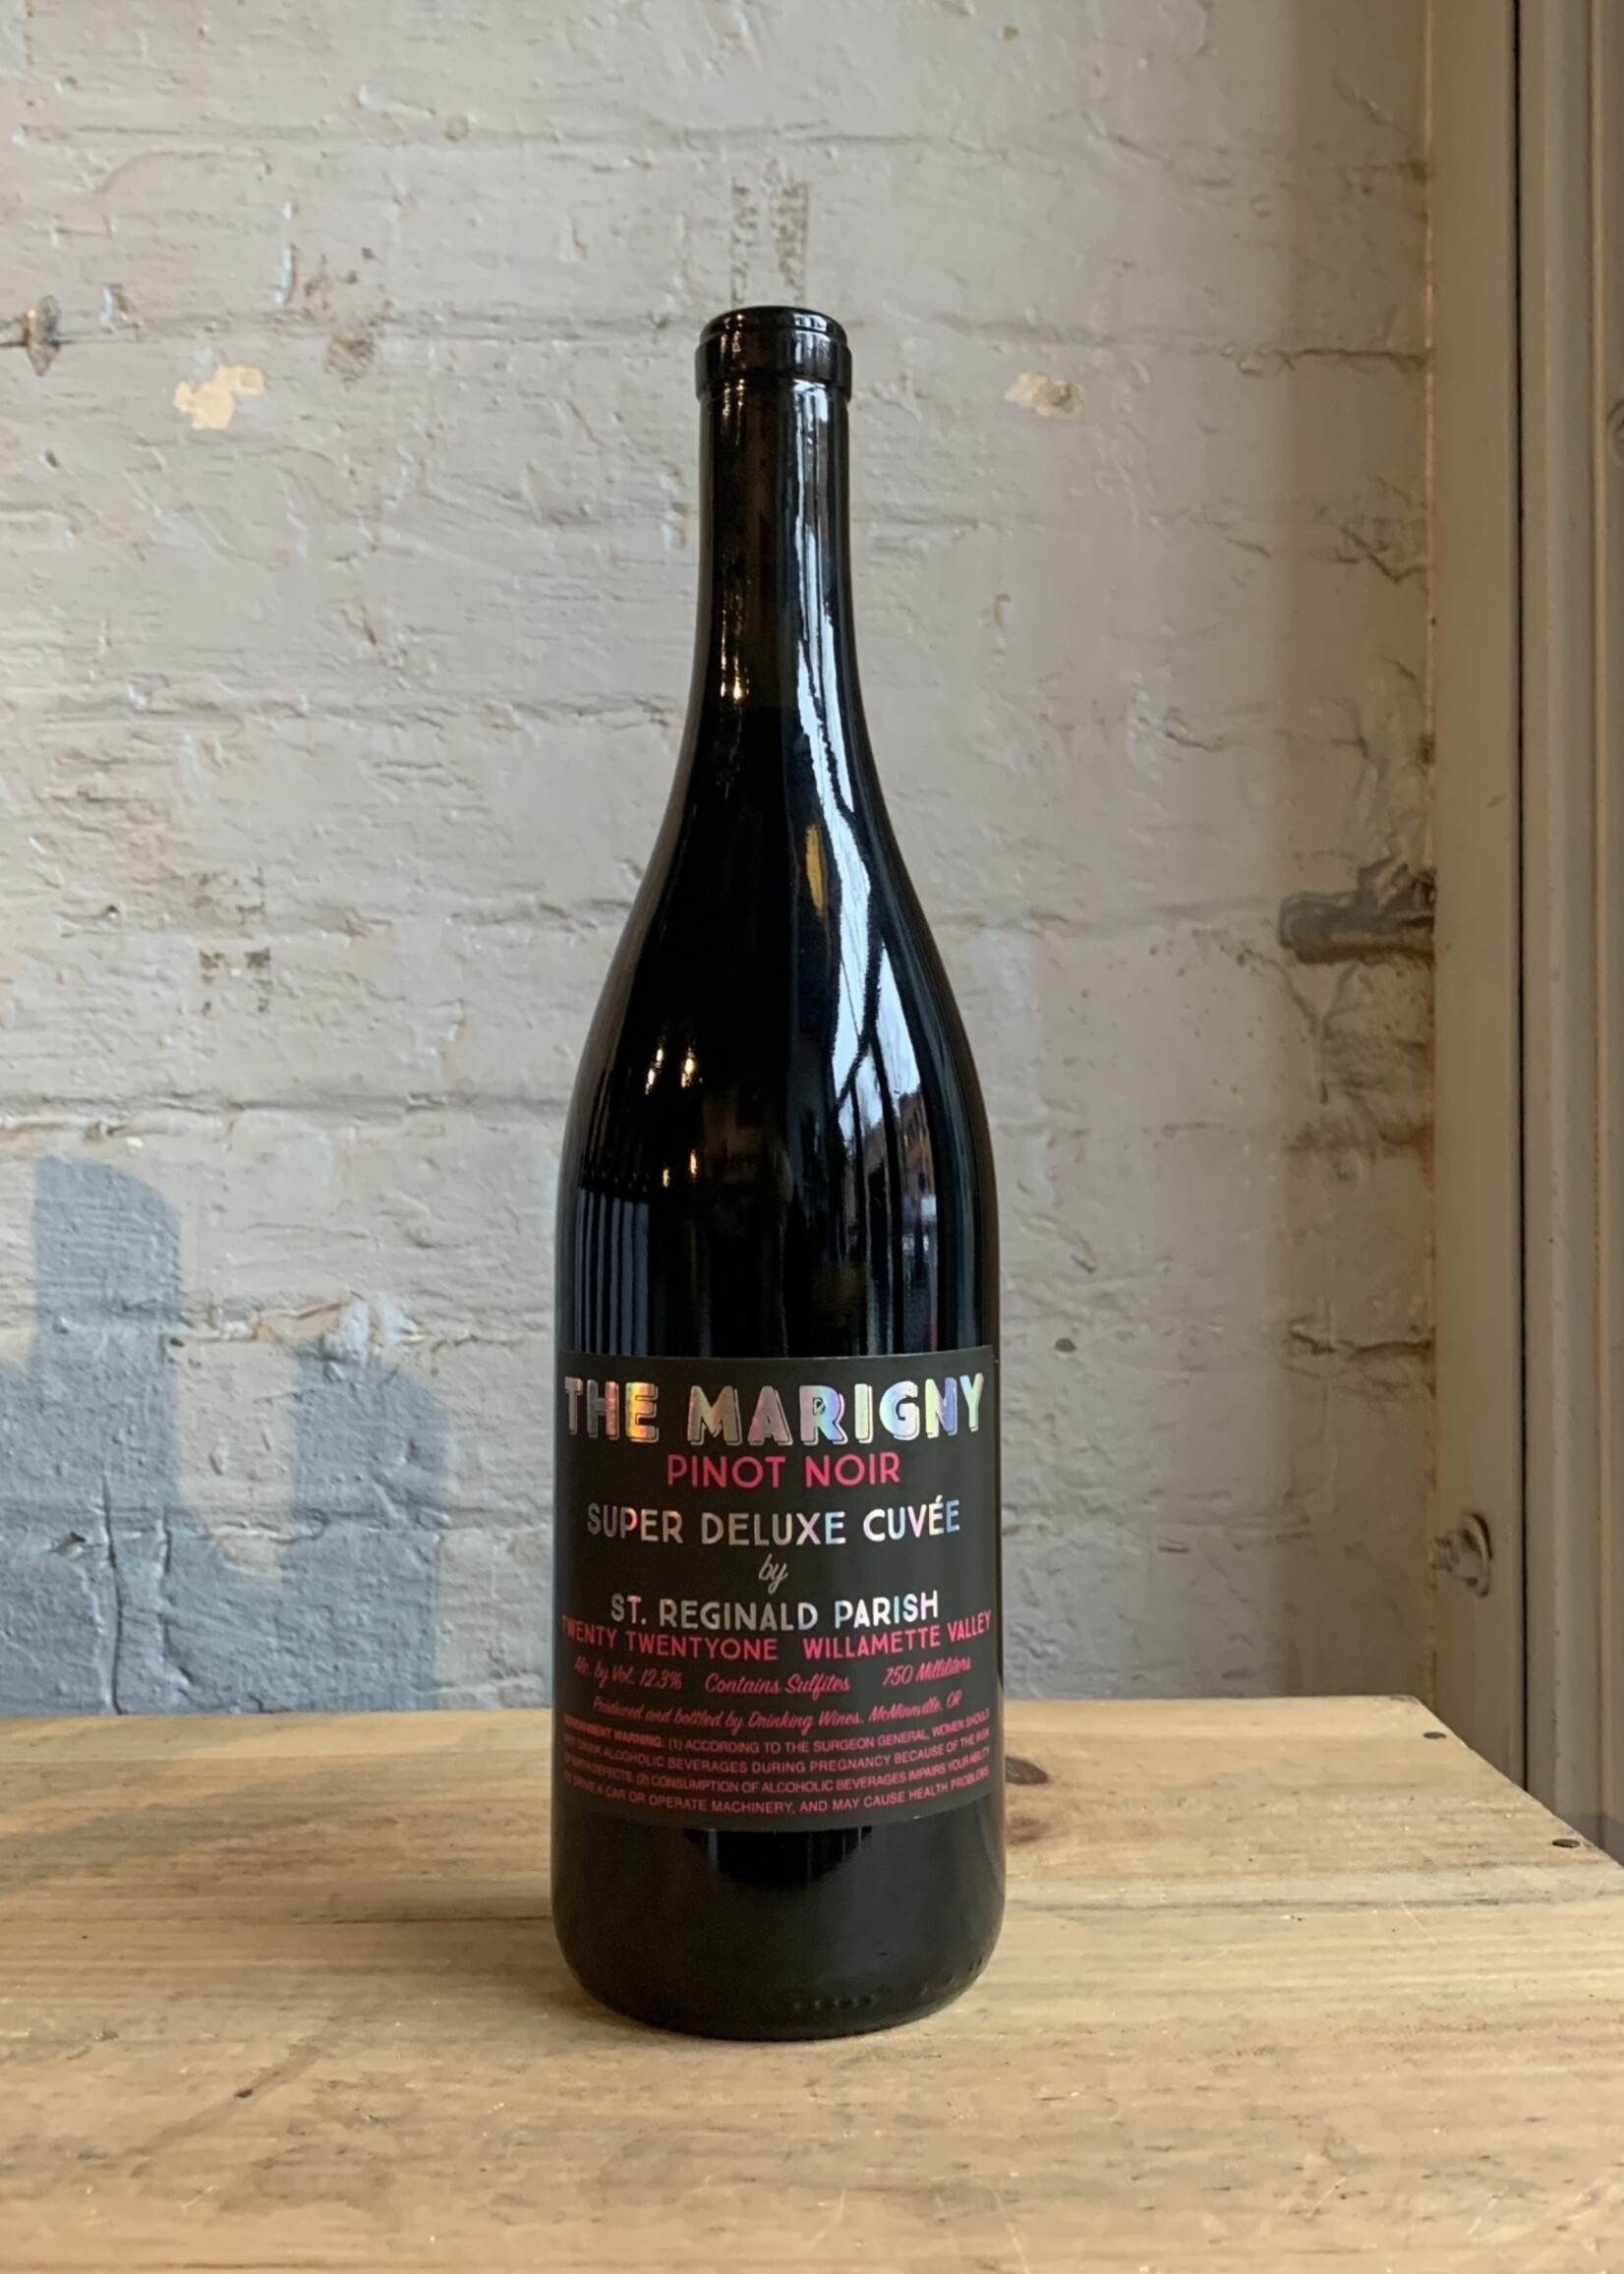 Wine 2021 St. Reginald Parish The Marigny Pinot Noir Super Deluxe Cuvee - Willamette Valley, Oregon (750ml)